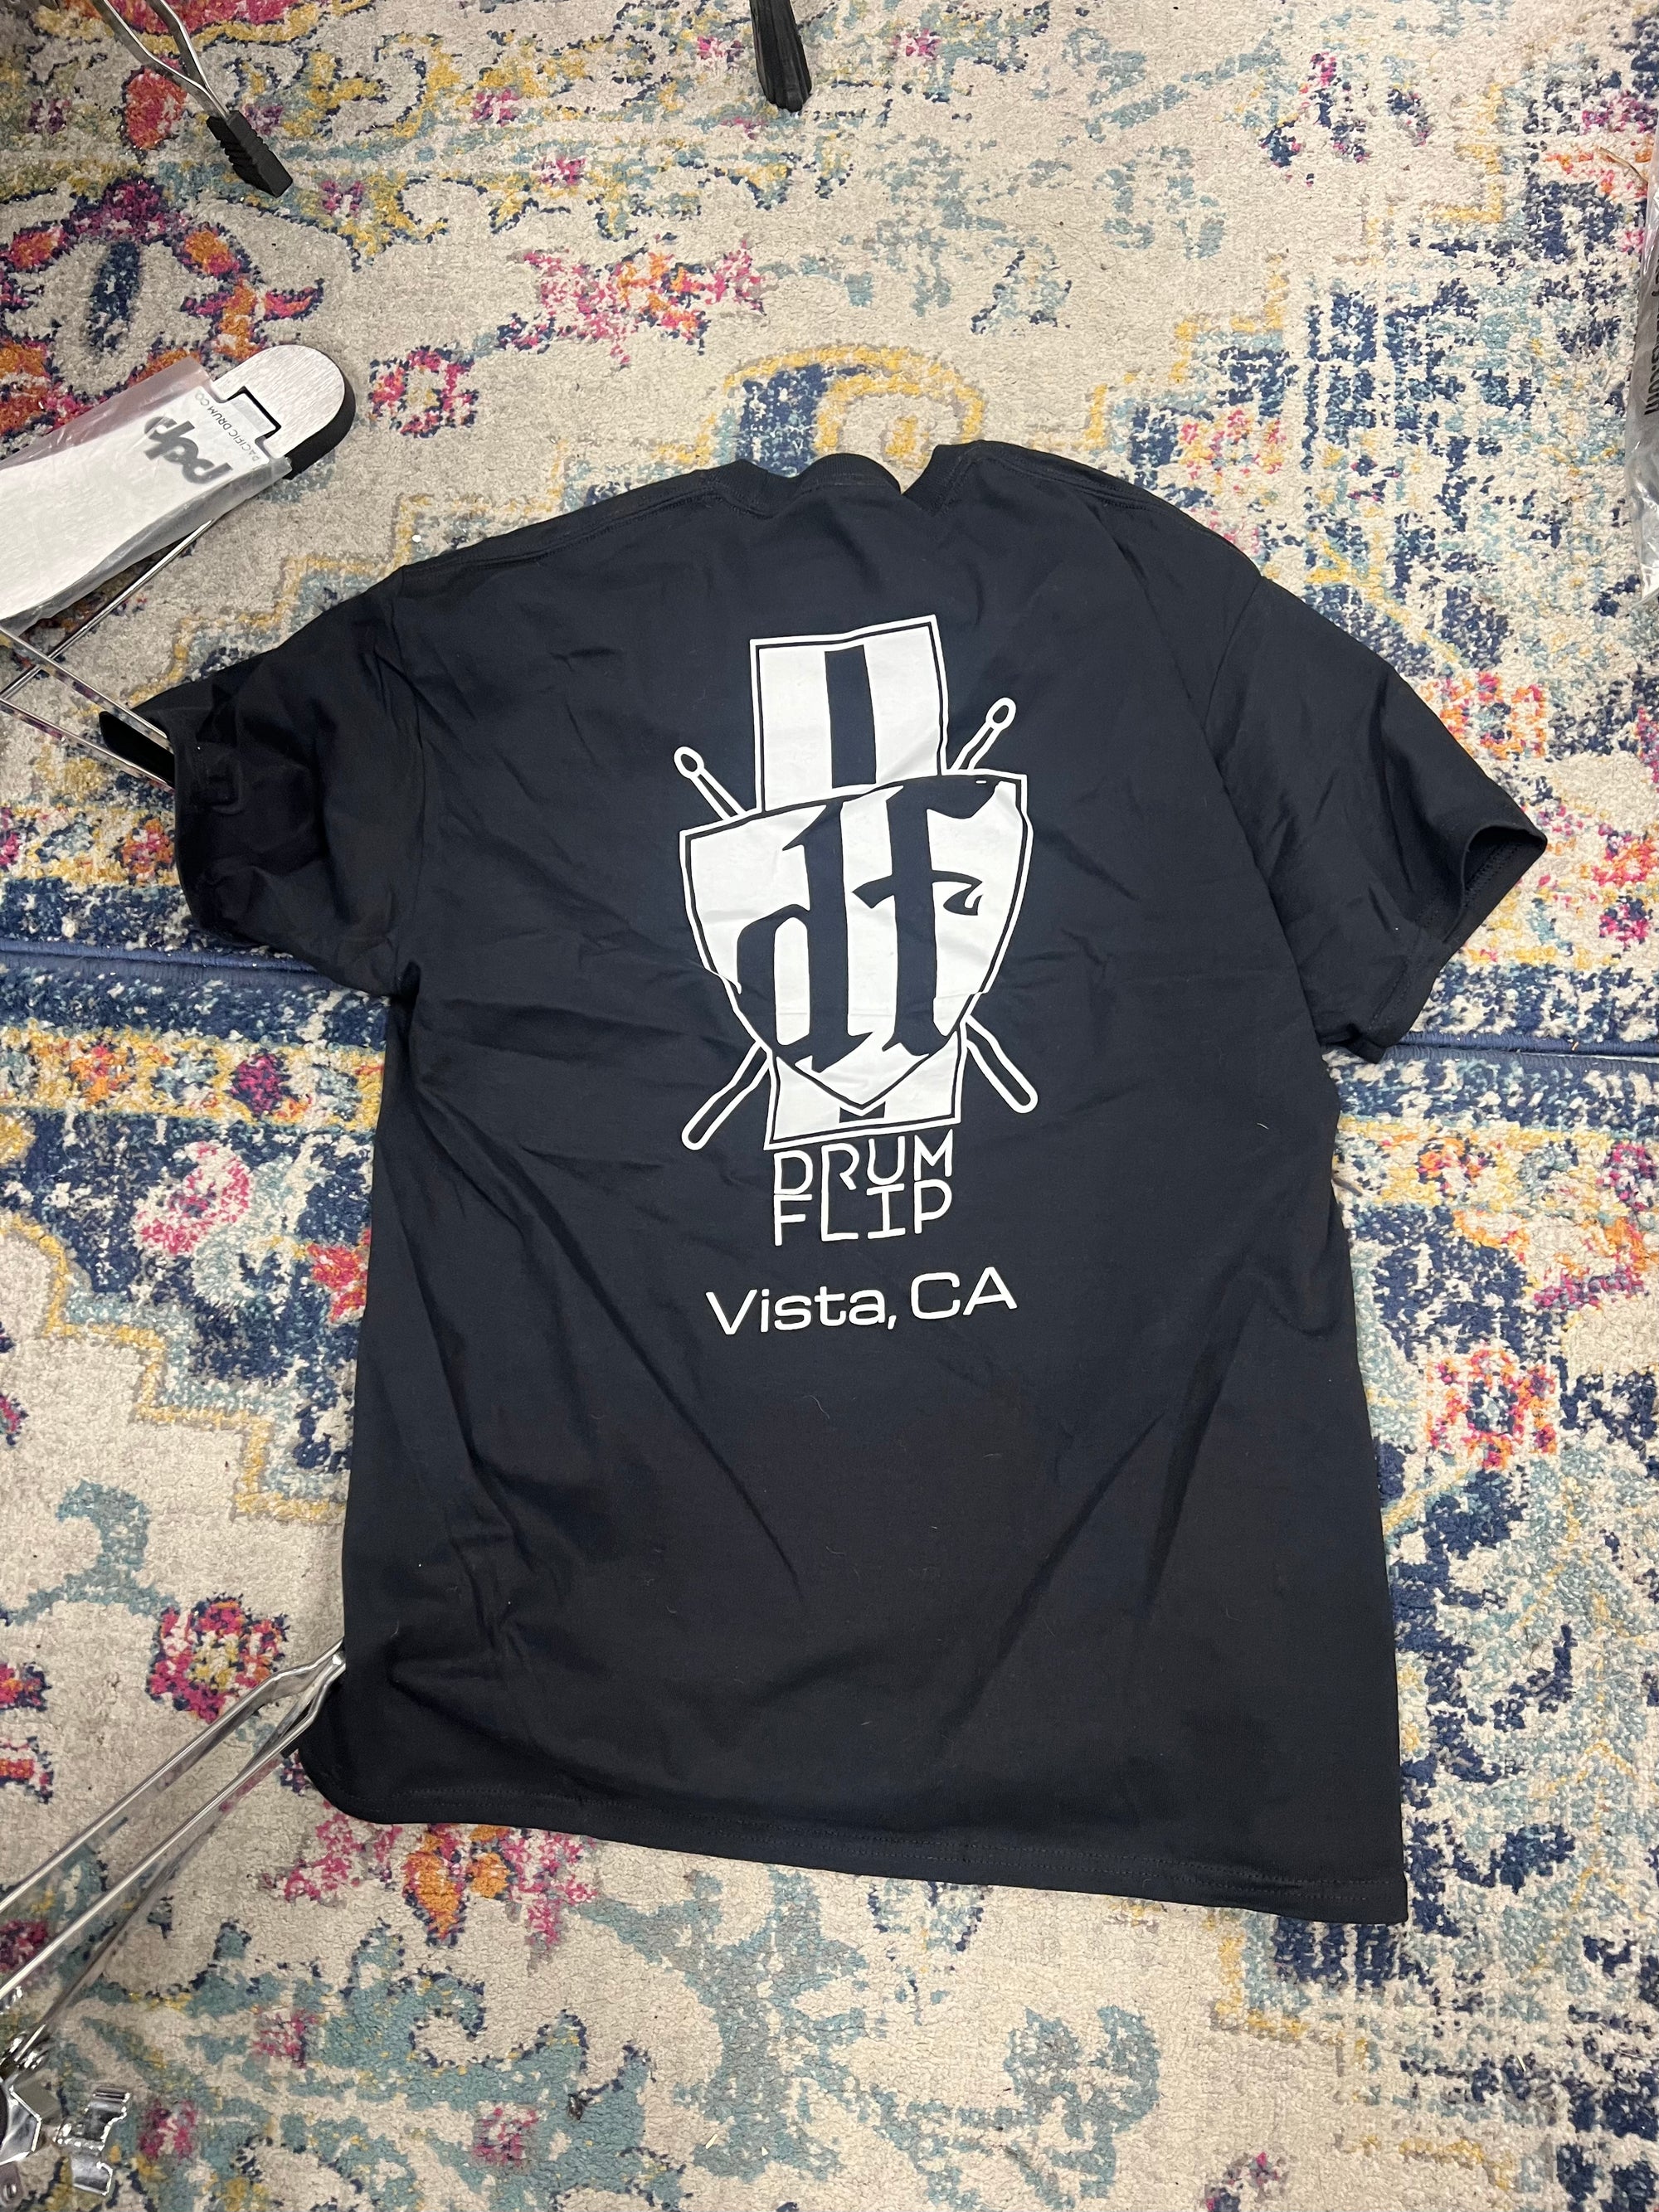 Drum Flip Vintage Design T-Shirt